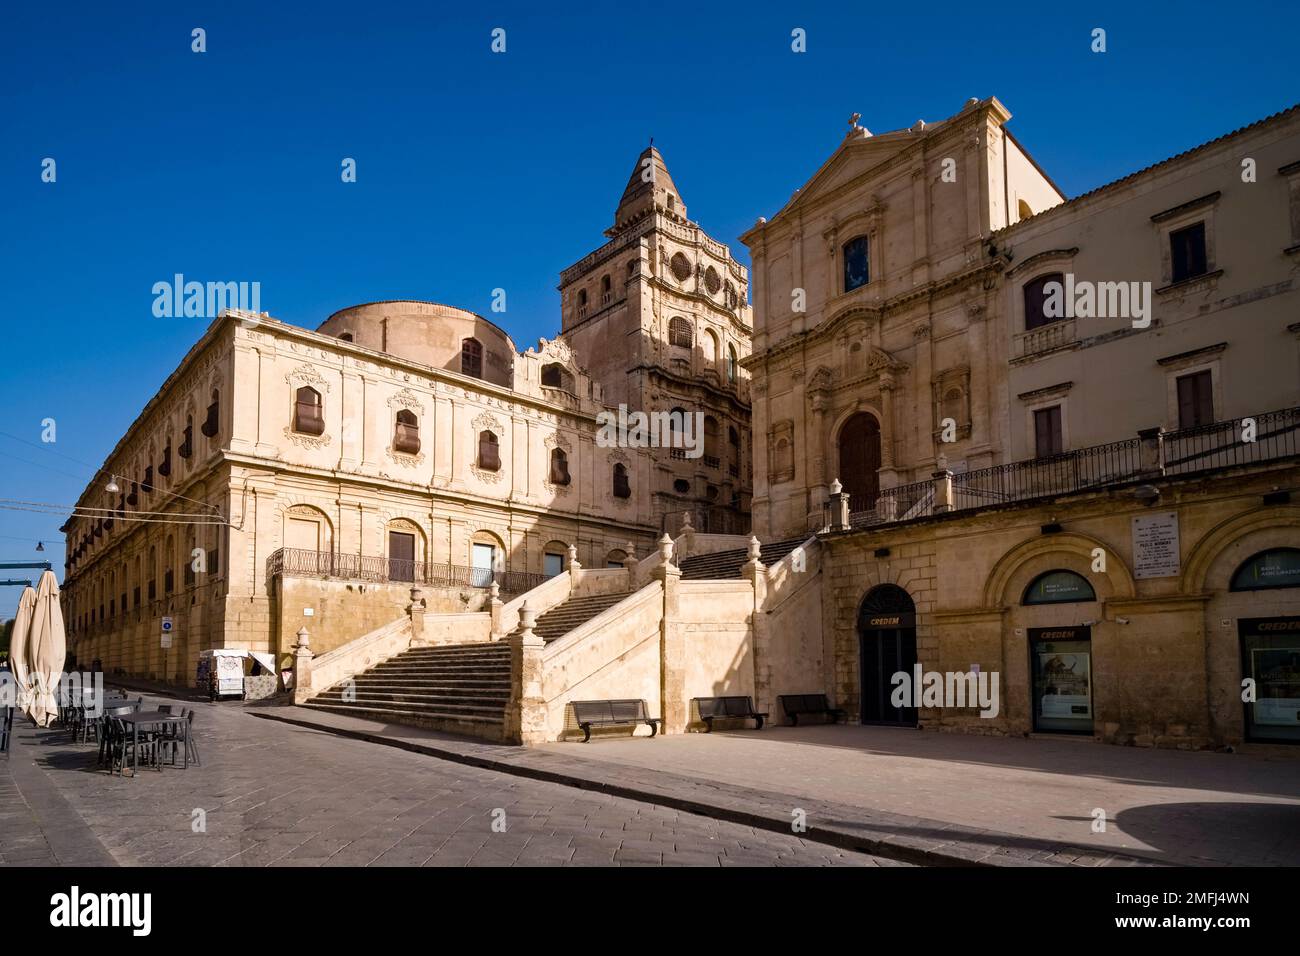 Les bâtiments de l’ex monastero del Santissimo Salvatore et de l’église Chiesa di San Francesco d’Assise all’Immacolata dans la ville baroque de Noto Banque D'Images